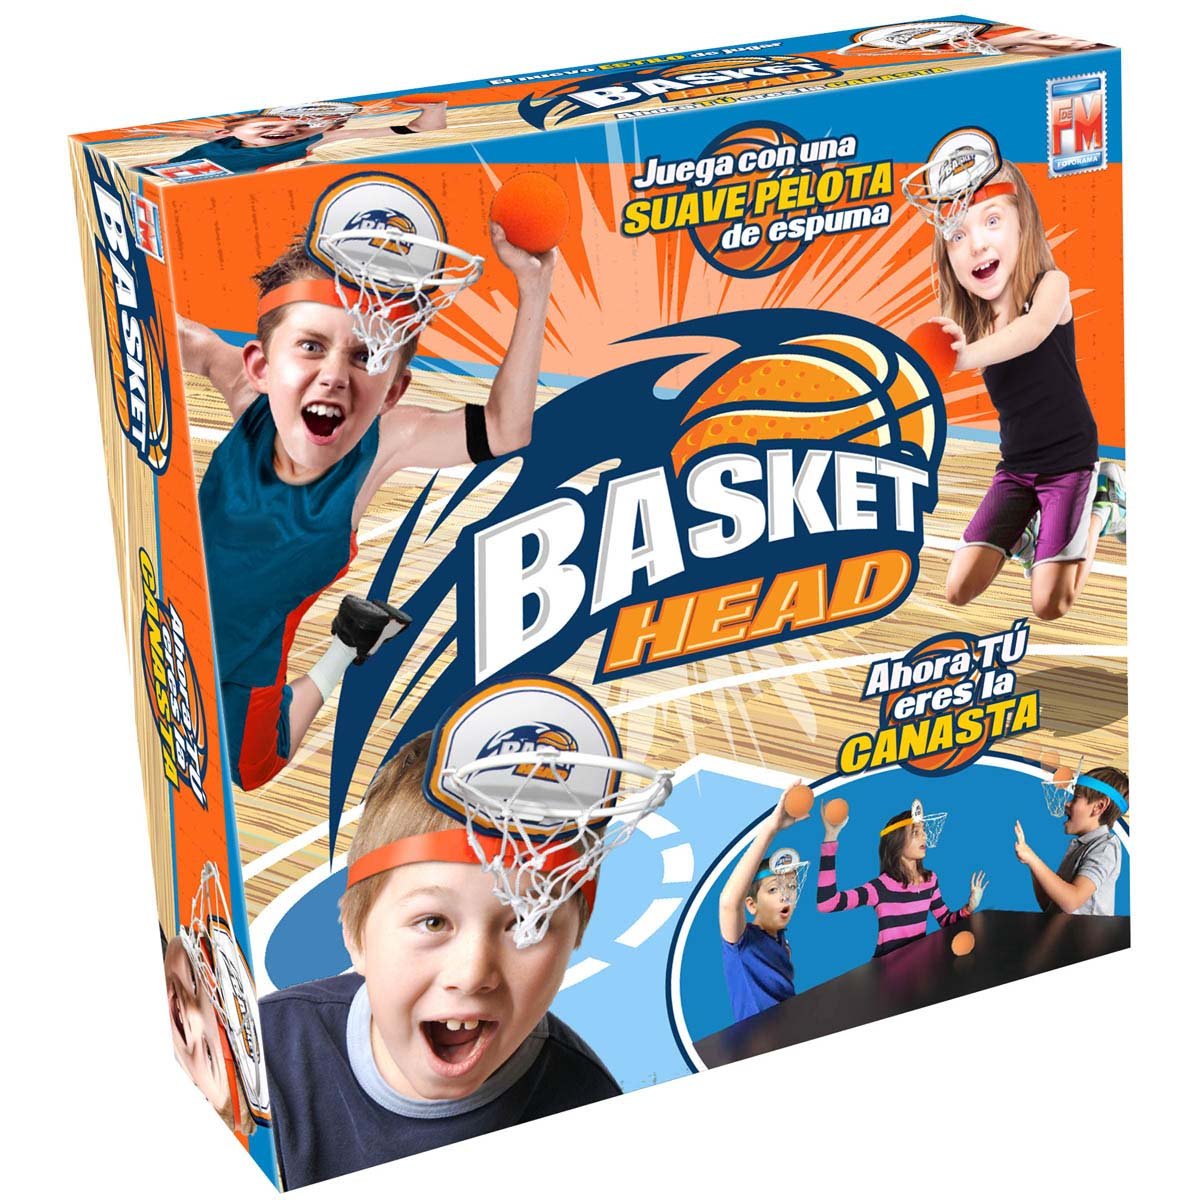 Basket Head Fotorama